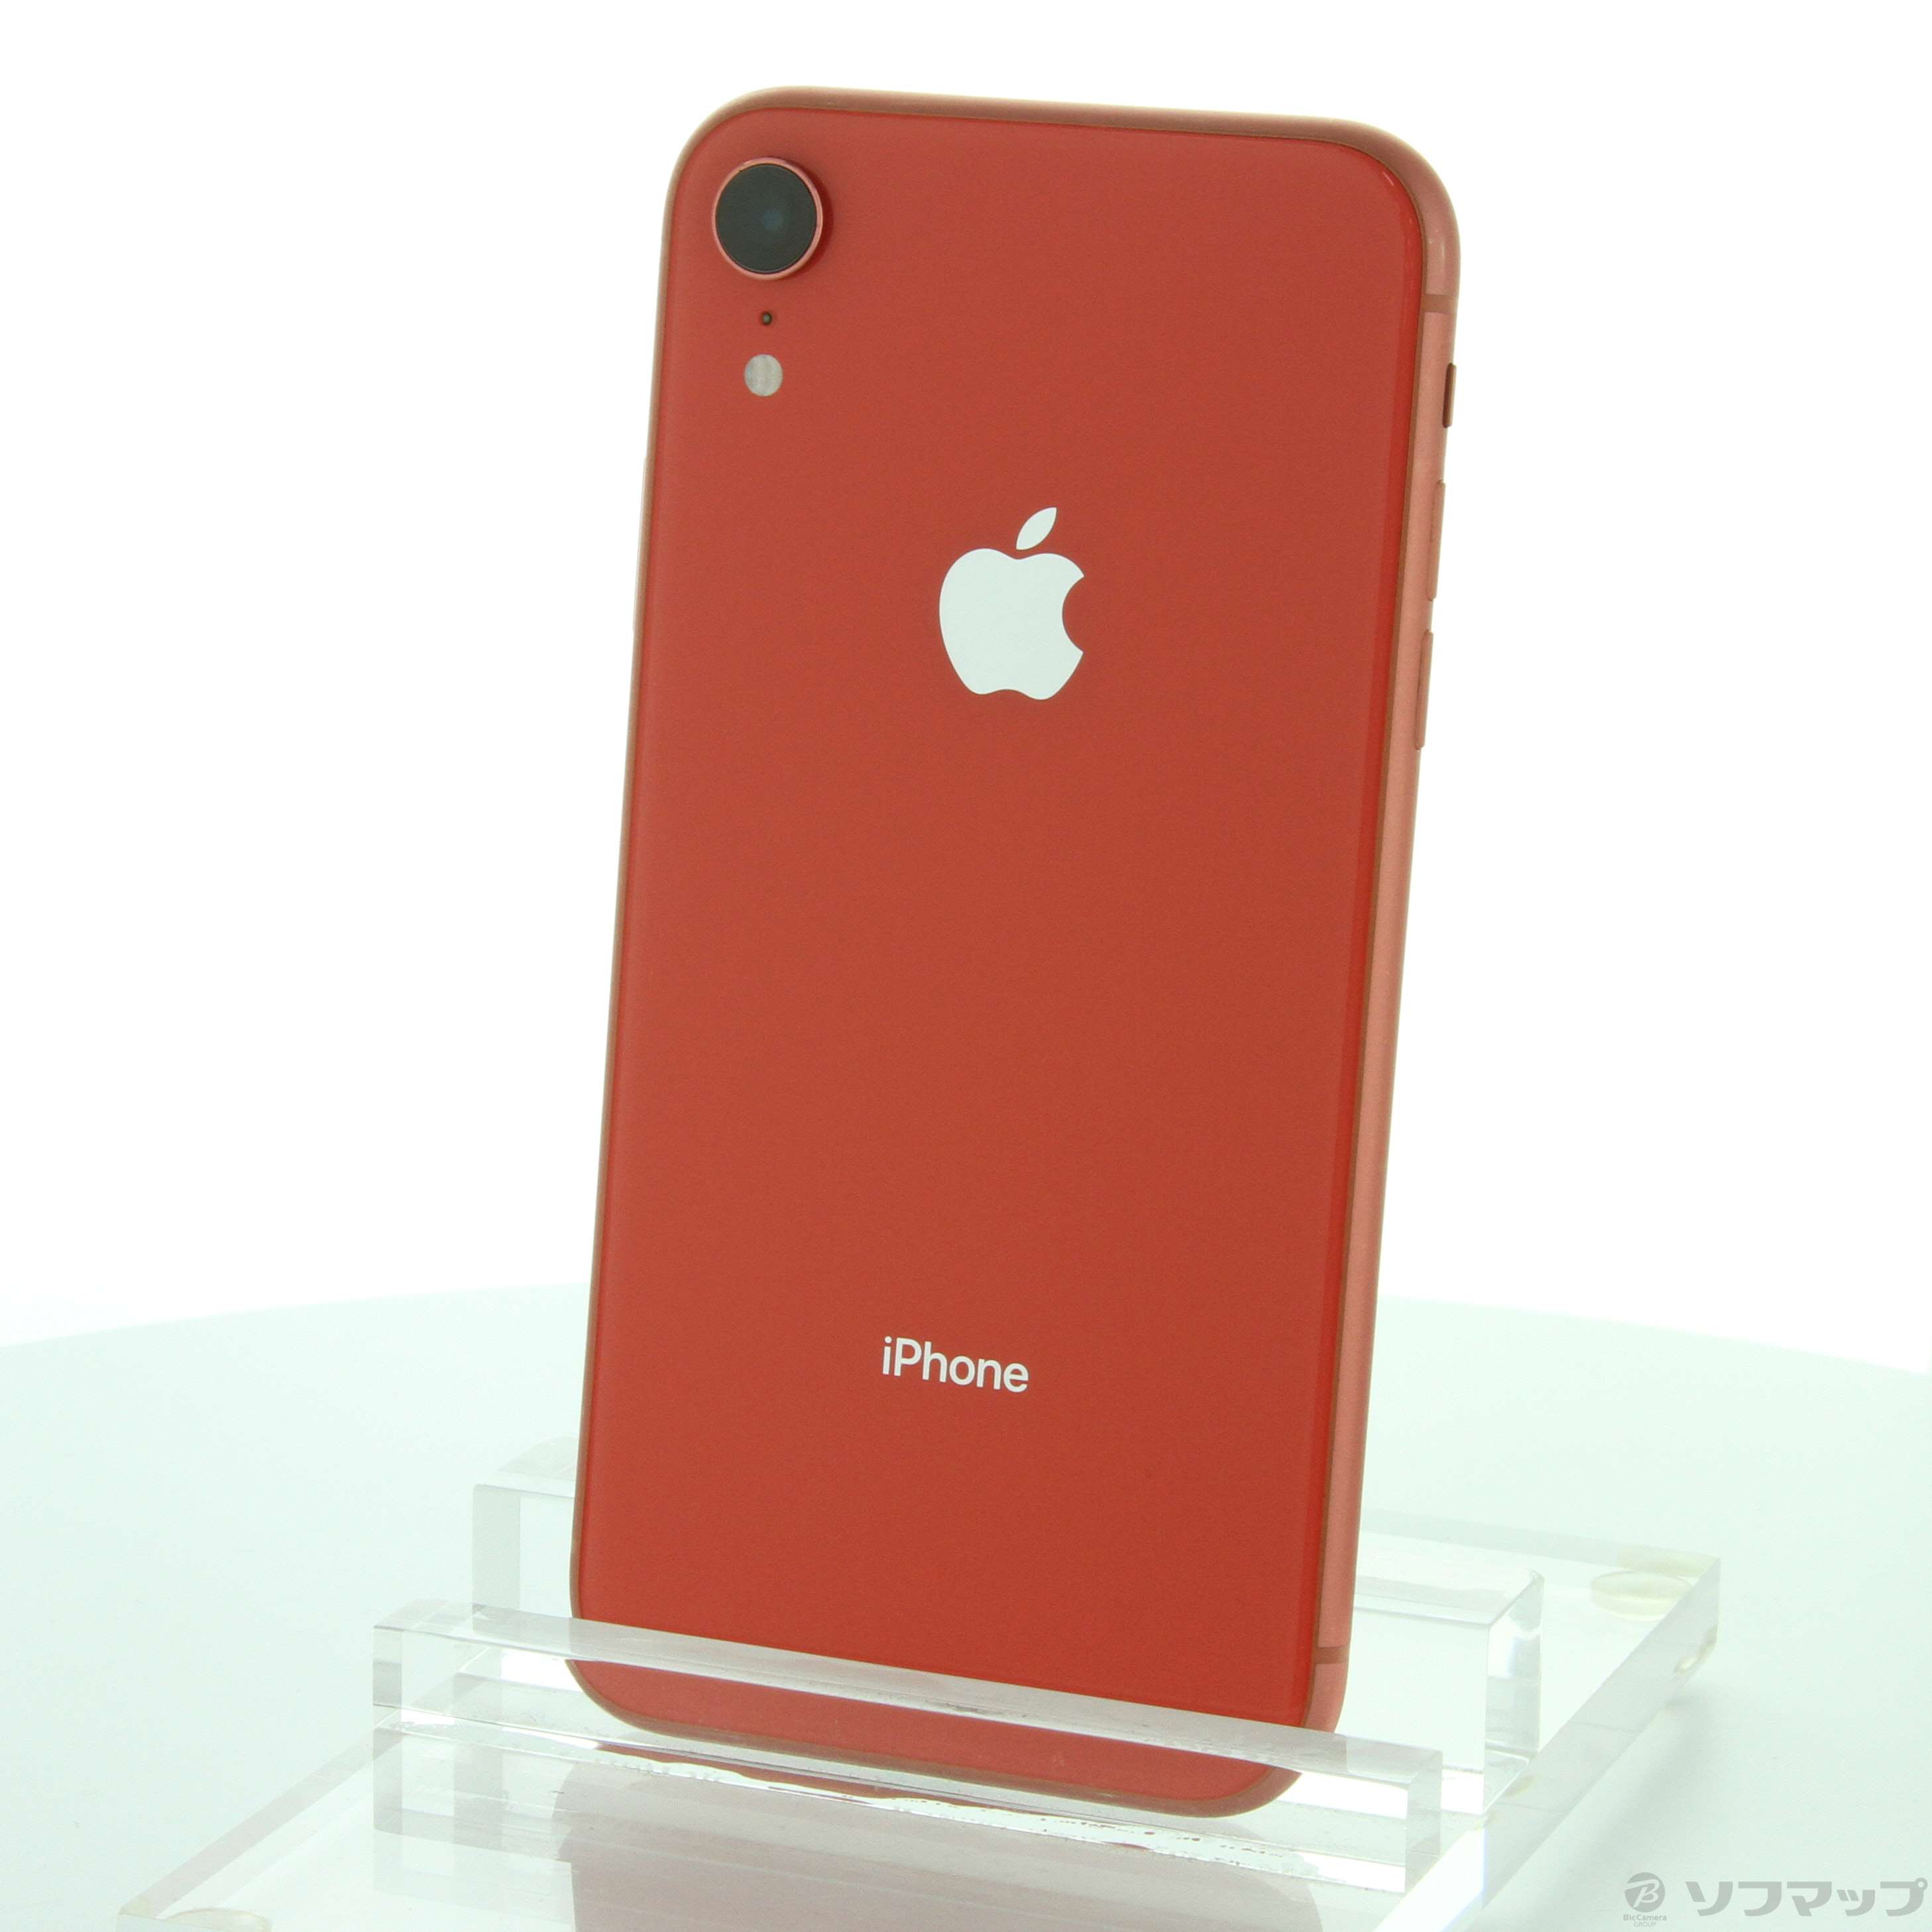 iPhone XR Coral 128GB ジャンク品500円ほどでしたら可能です